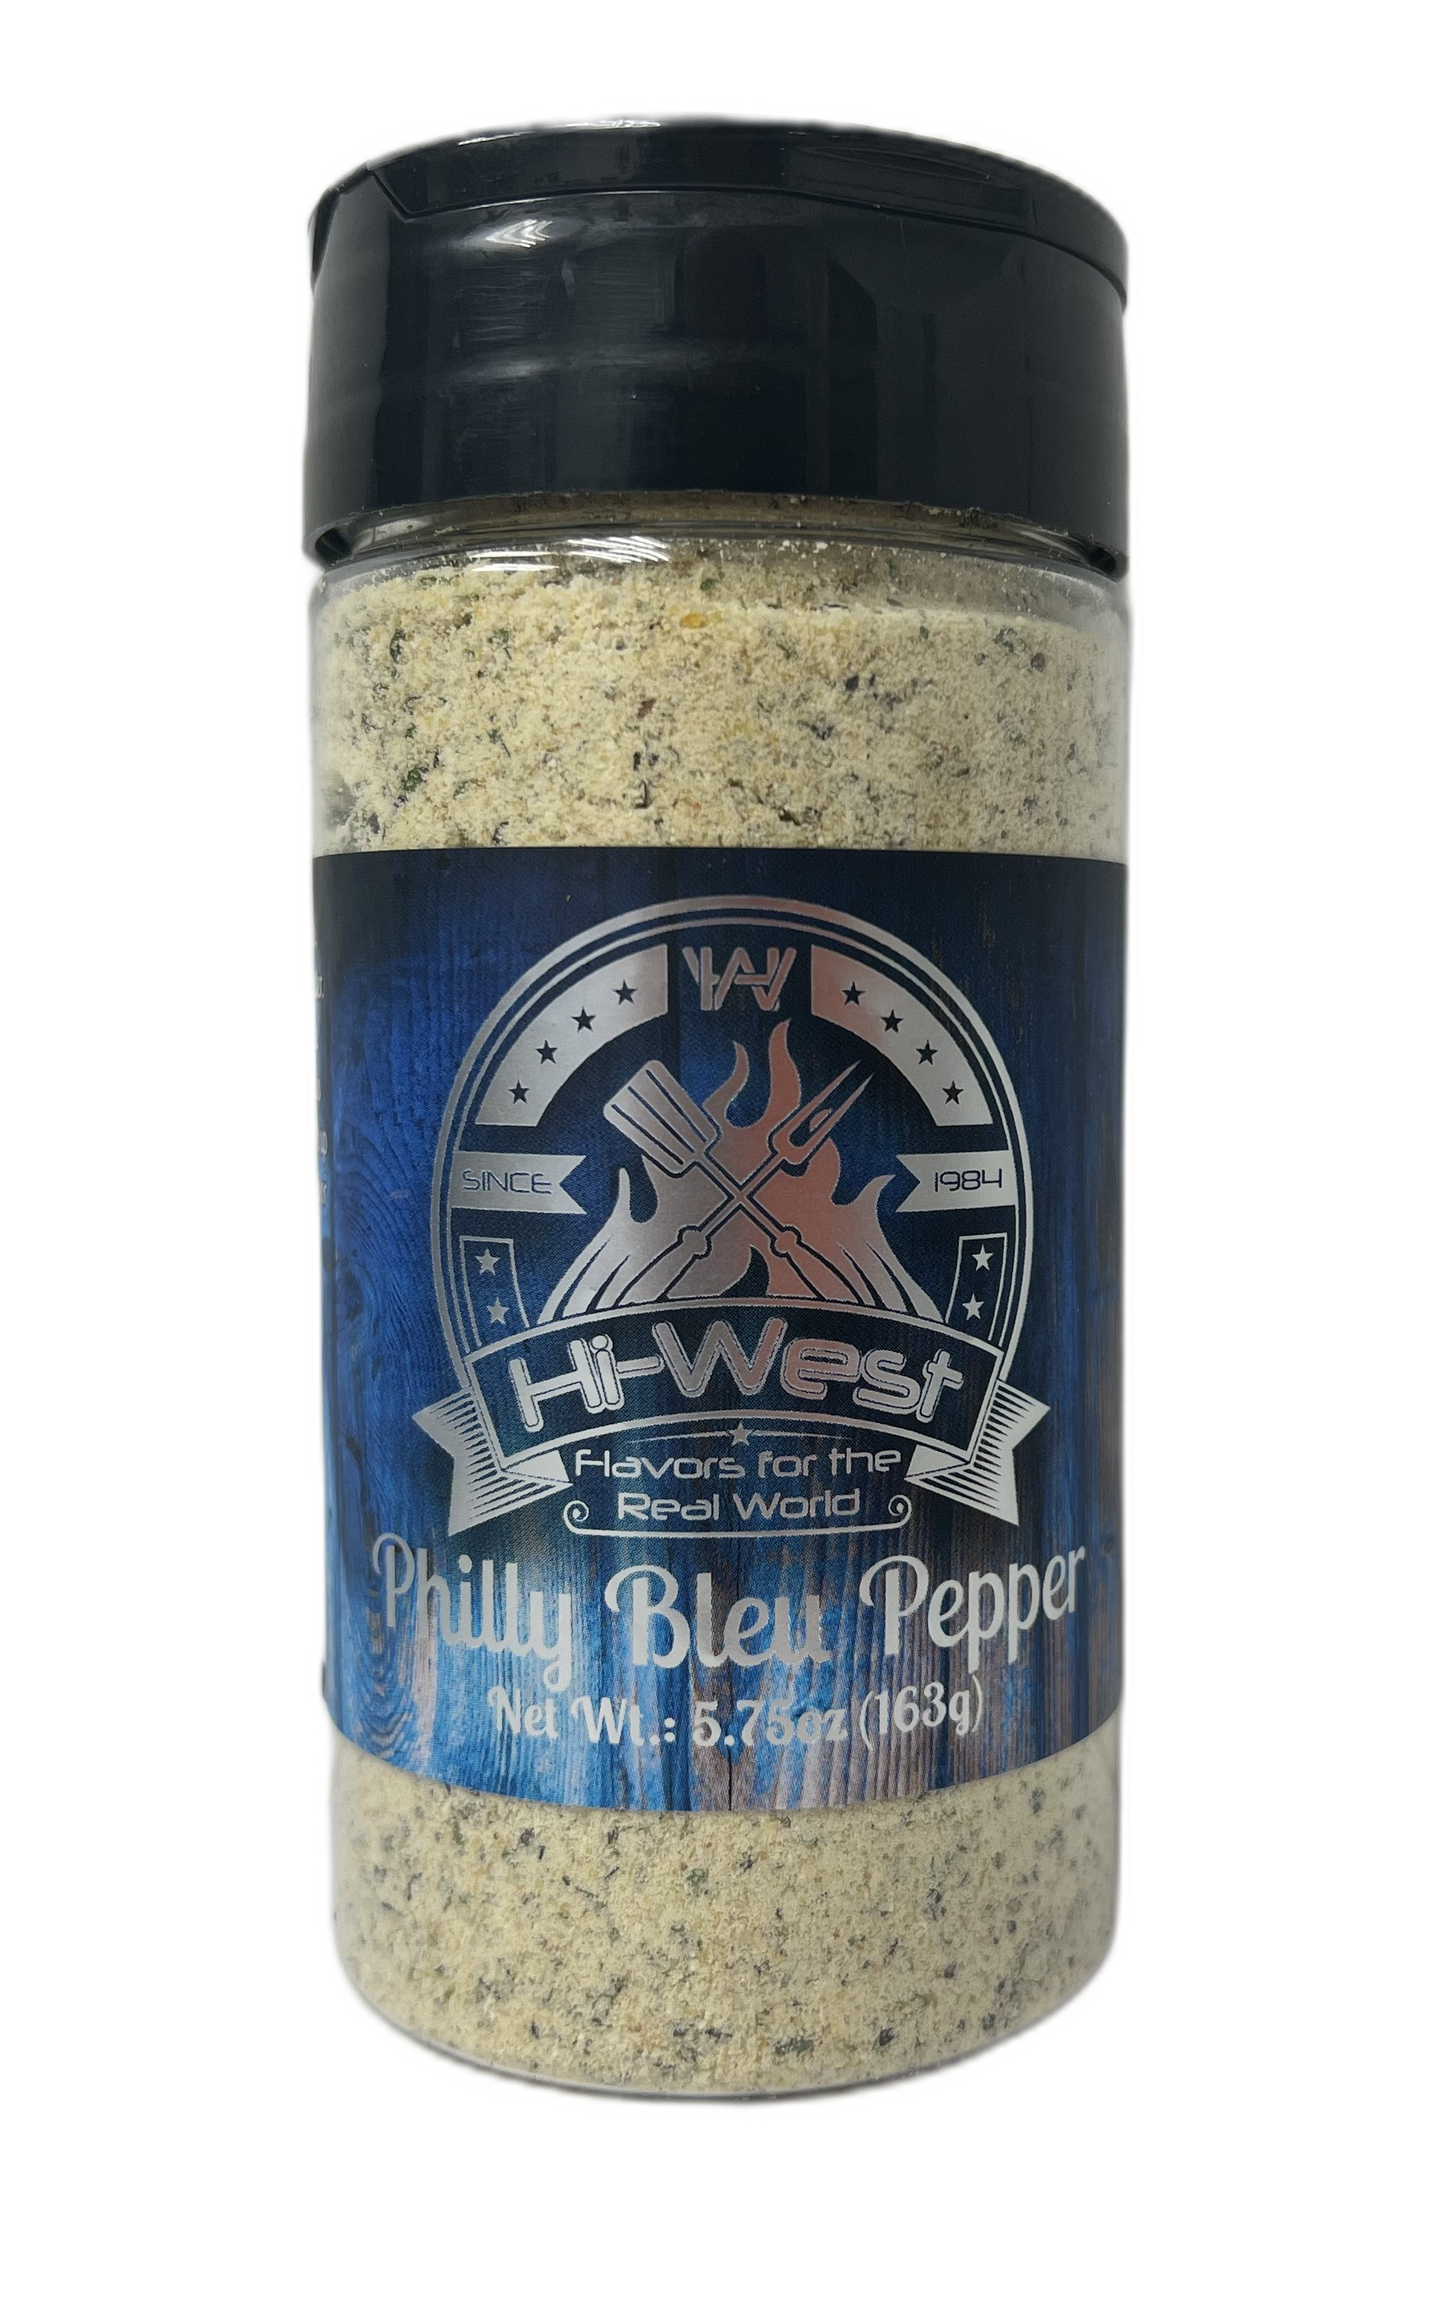 Hi-West Philly Bleu Pepper 5.75oz